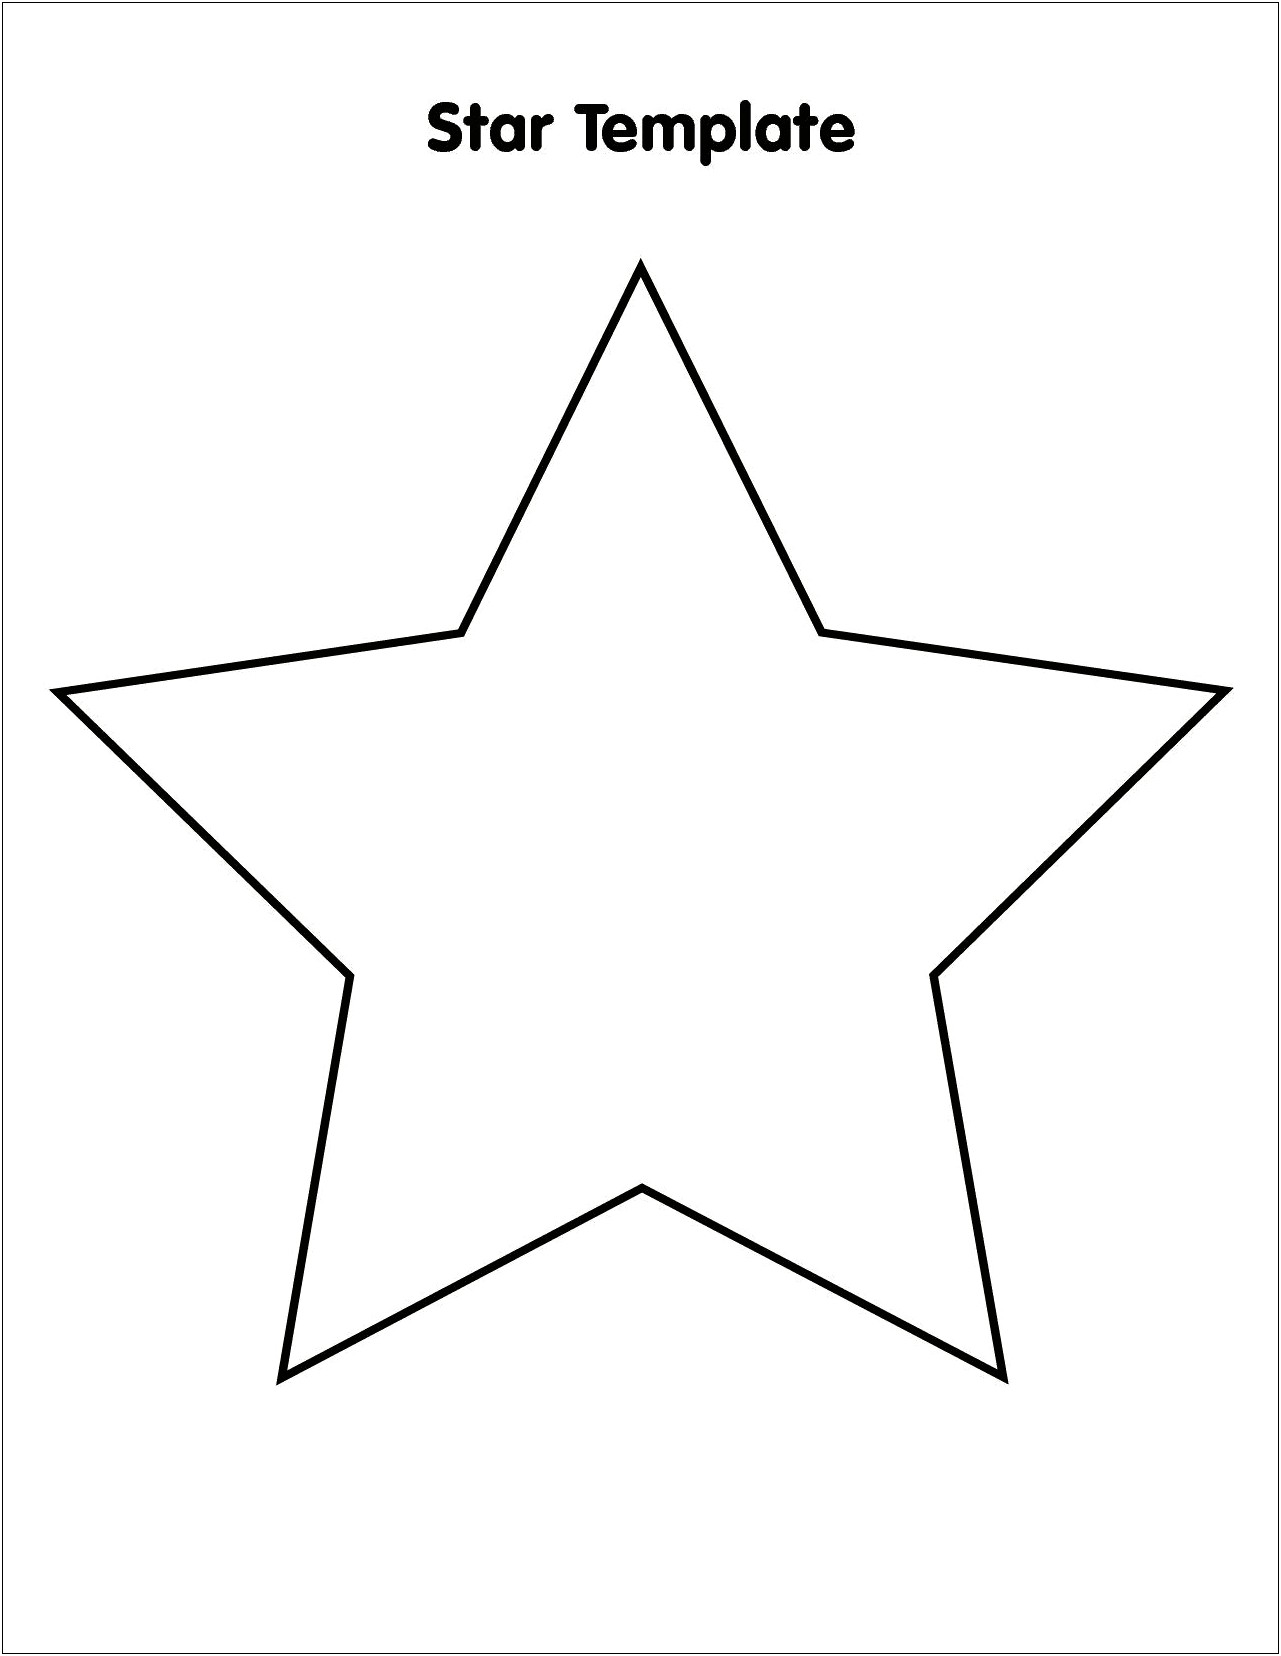 3x3 Star Free Printable Template Star